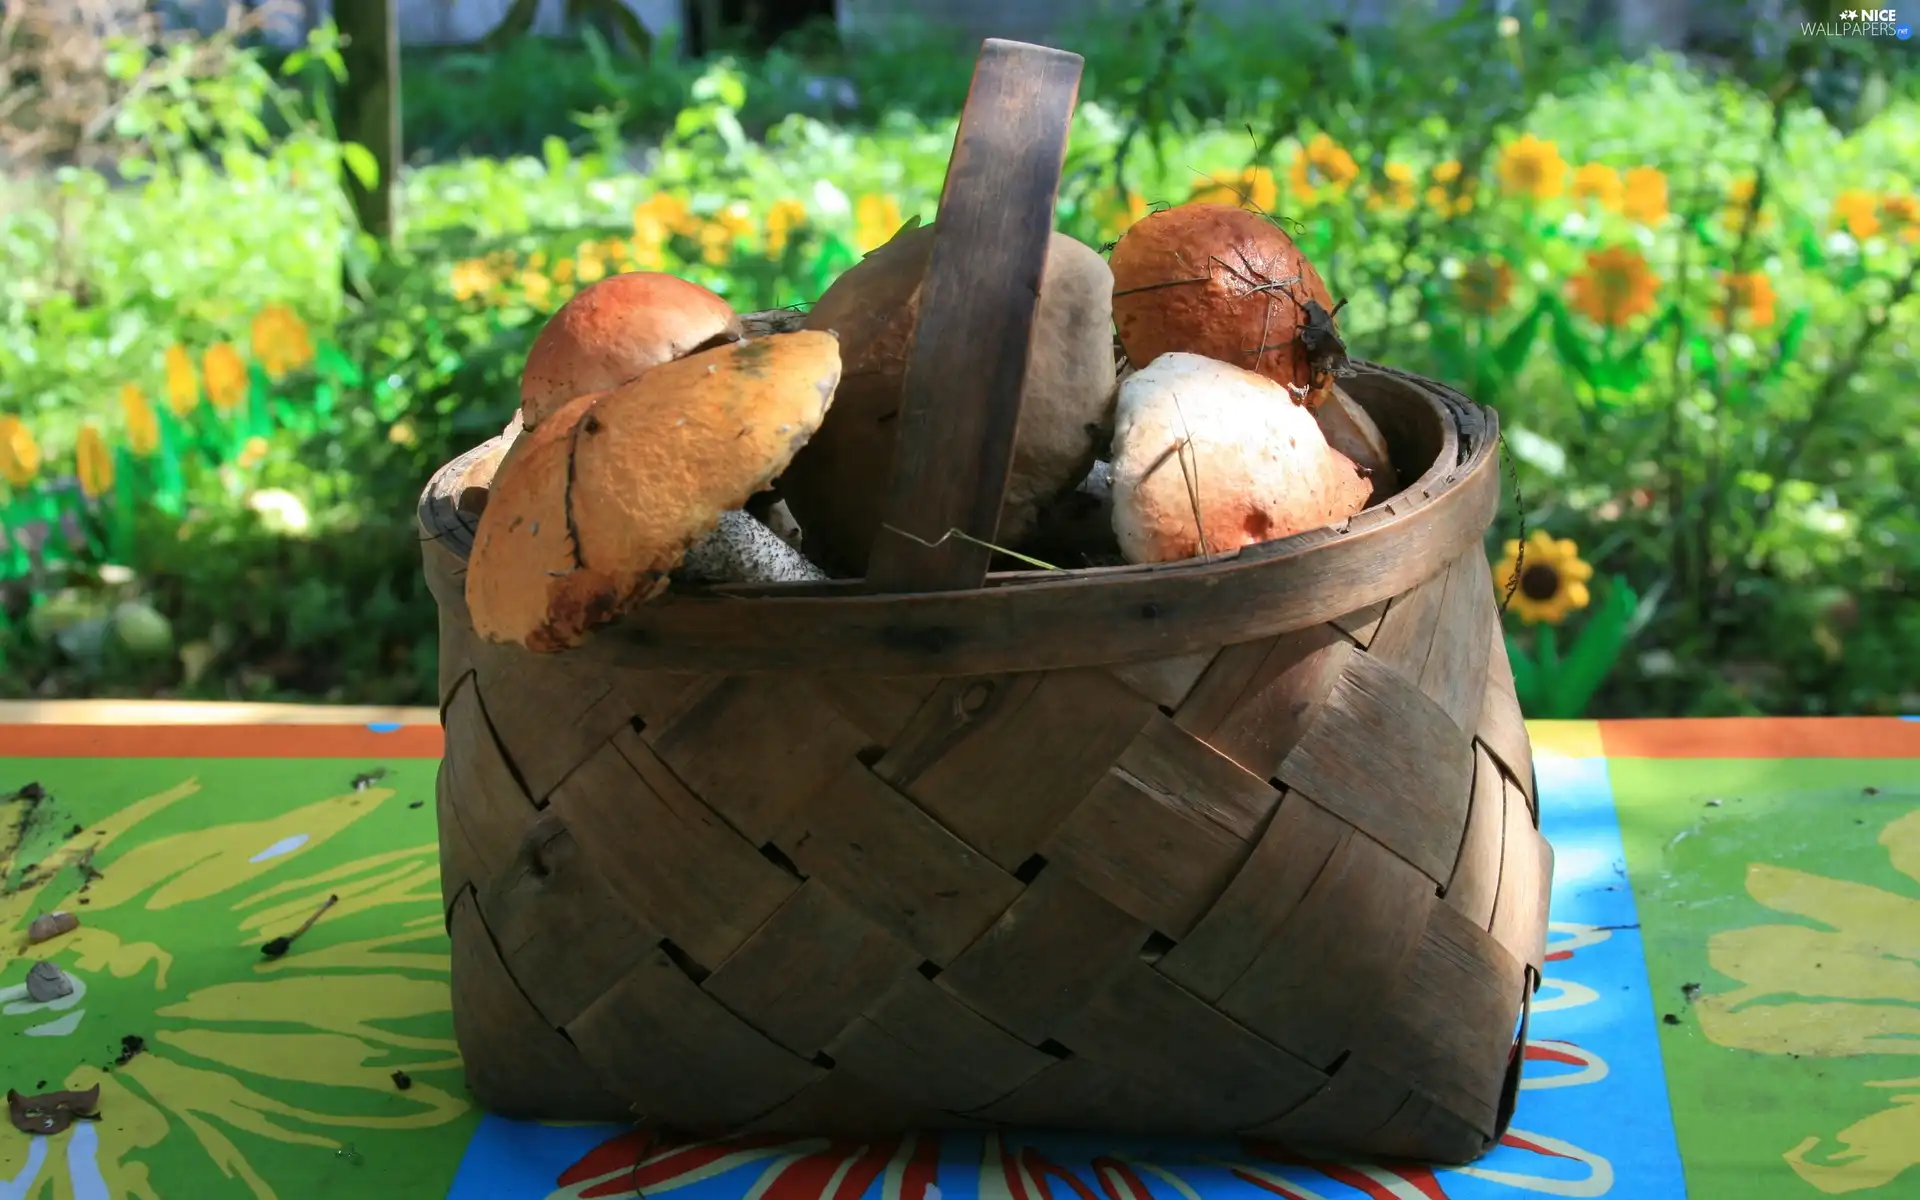 Flowers, mushrooms, basket